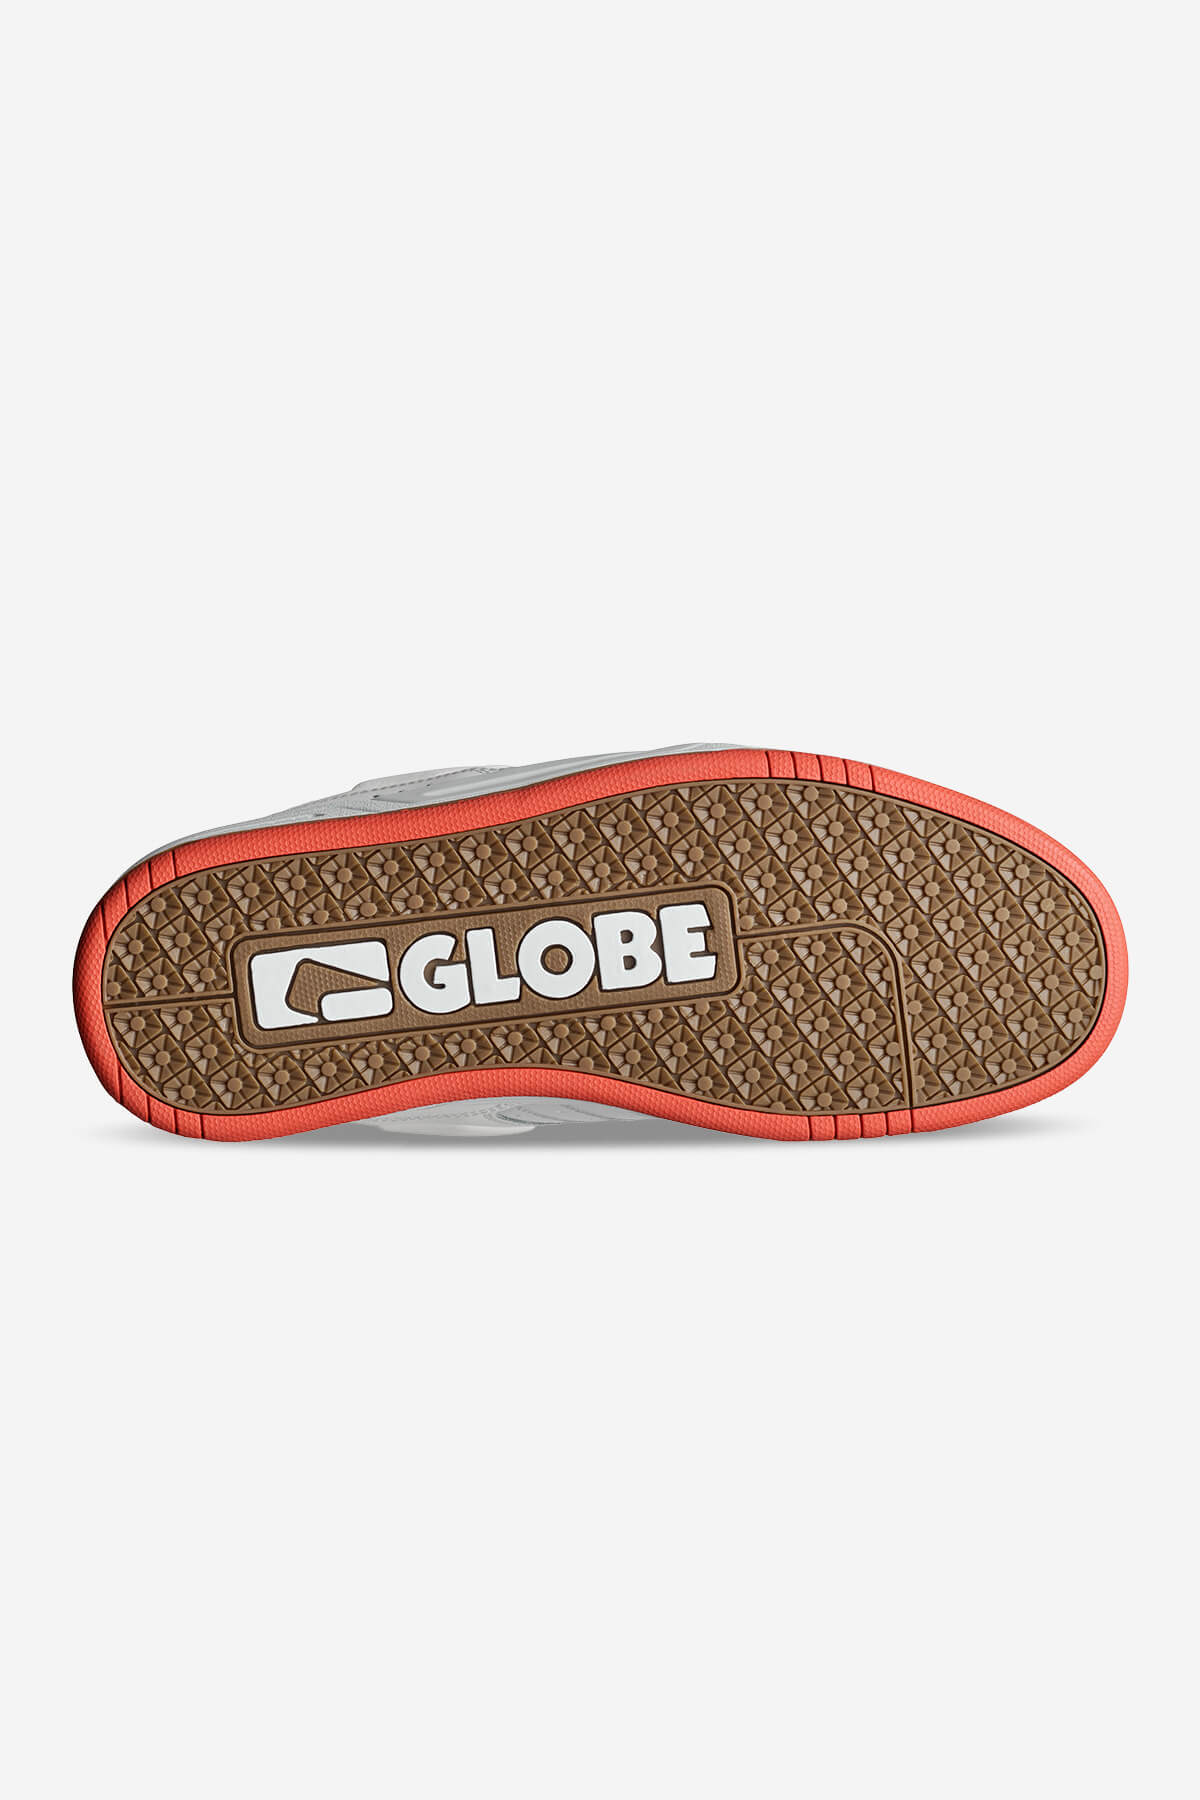 Globe - Fusion - White/Red - skateboard Schoenen